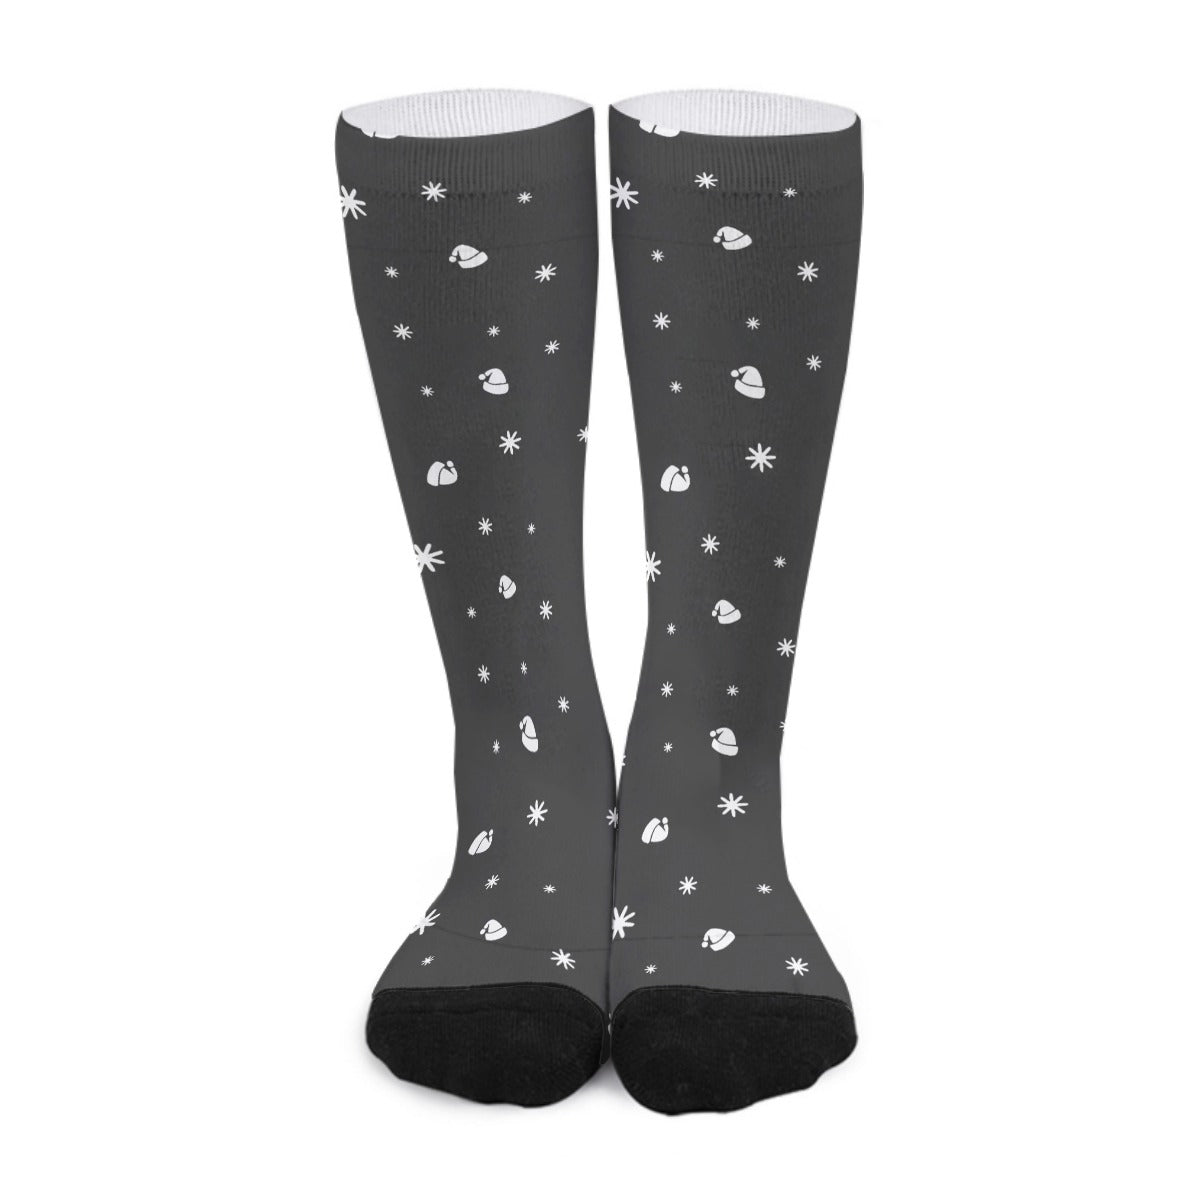 Unisex Long Socks - Black - Hats and Snowflakes - Festive Style